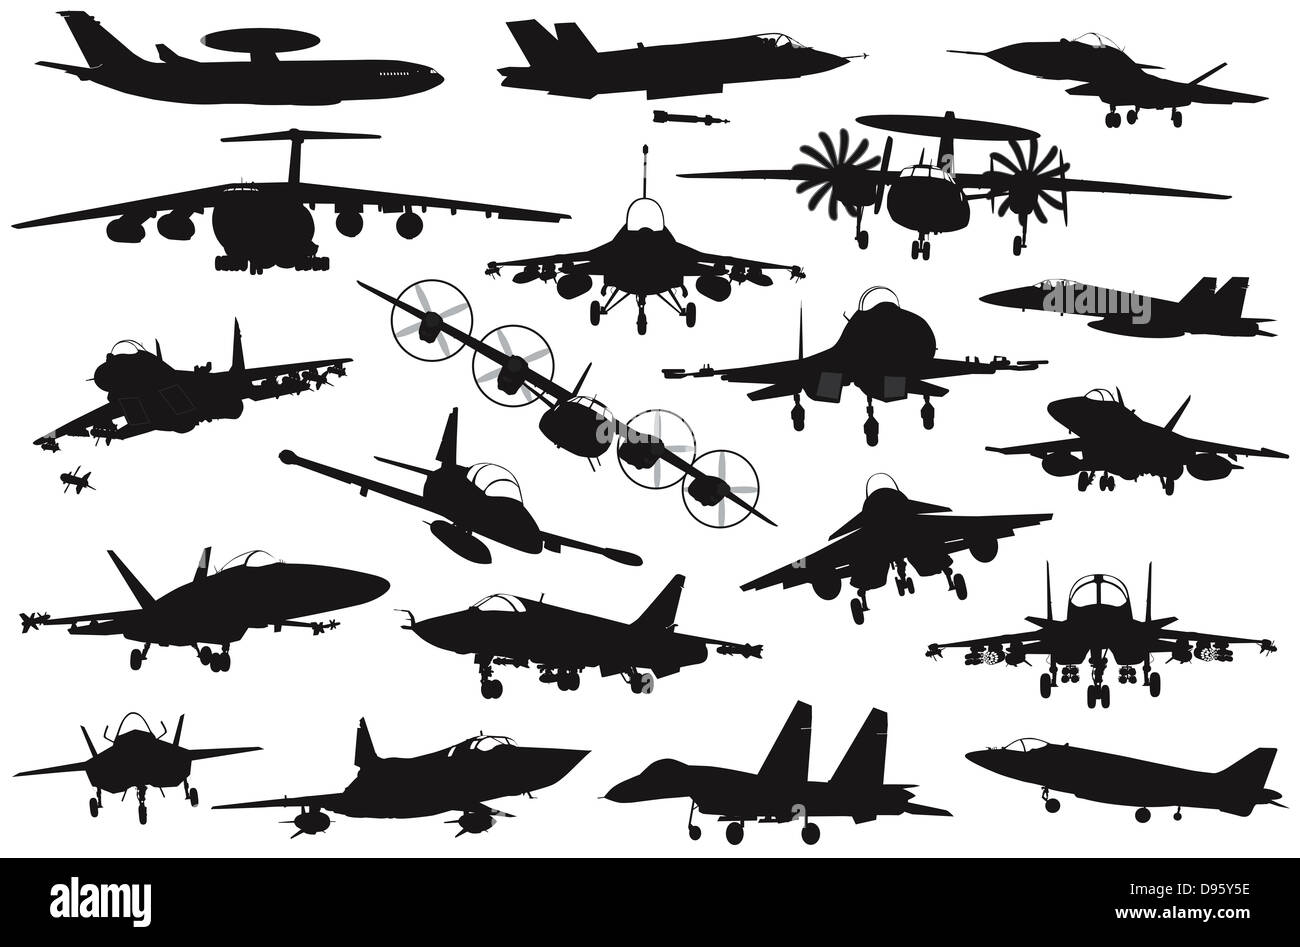 Military aircrafts set Stock Photo